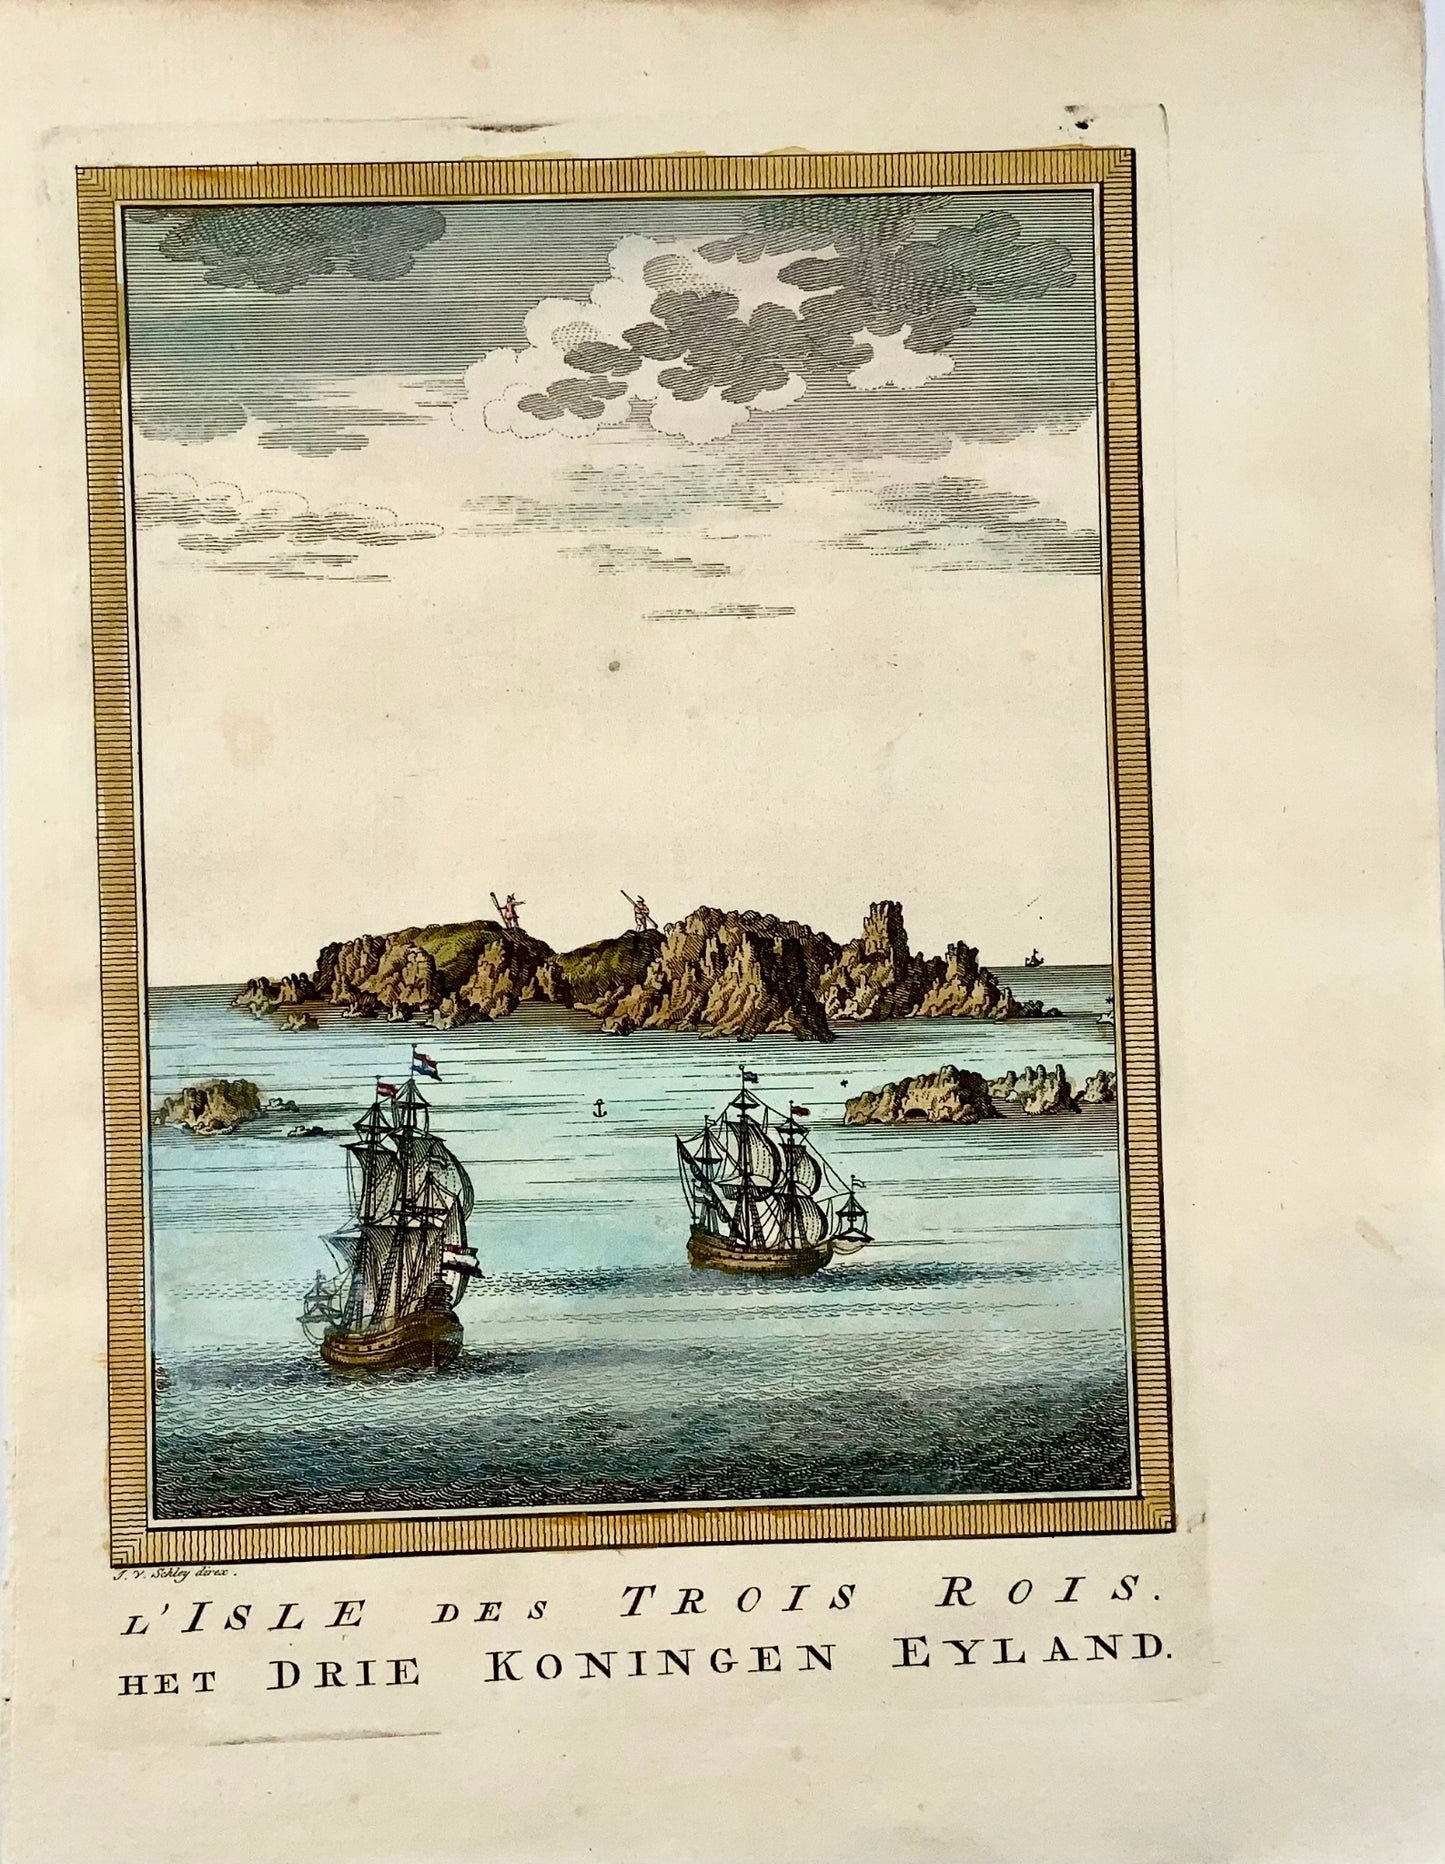 1750 J. Schley, Manawatawh, Three Kings Island, New Zealand, map, foreign topography